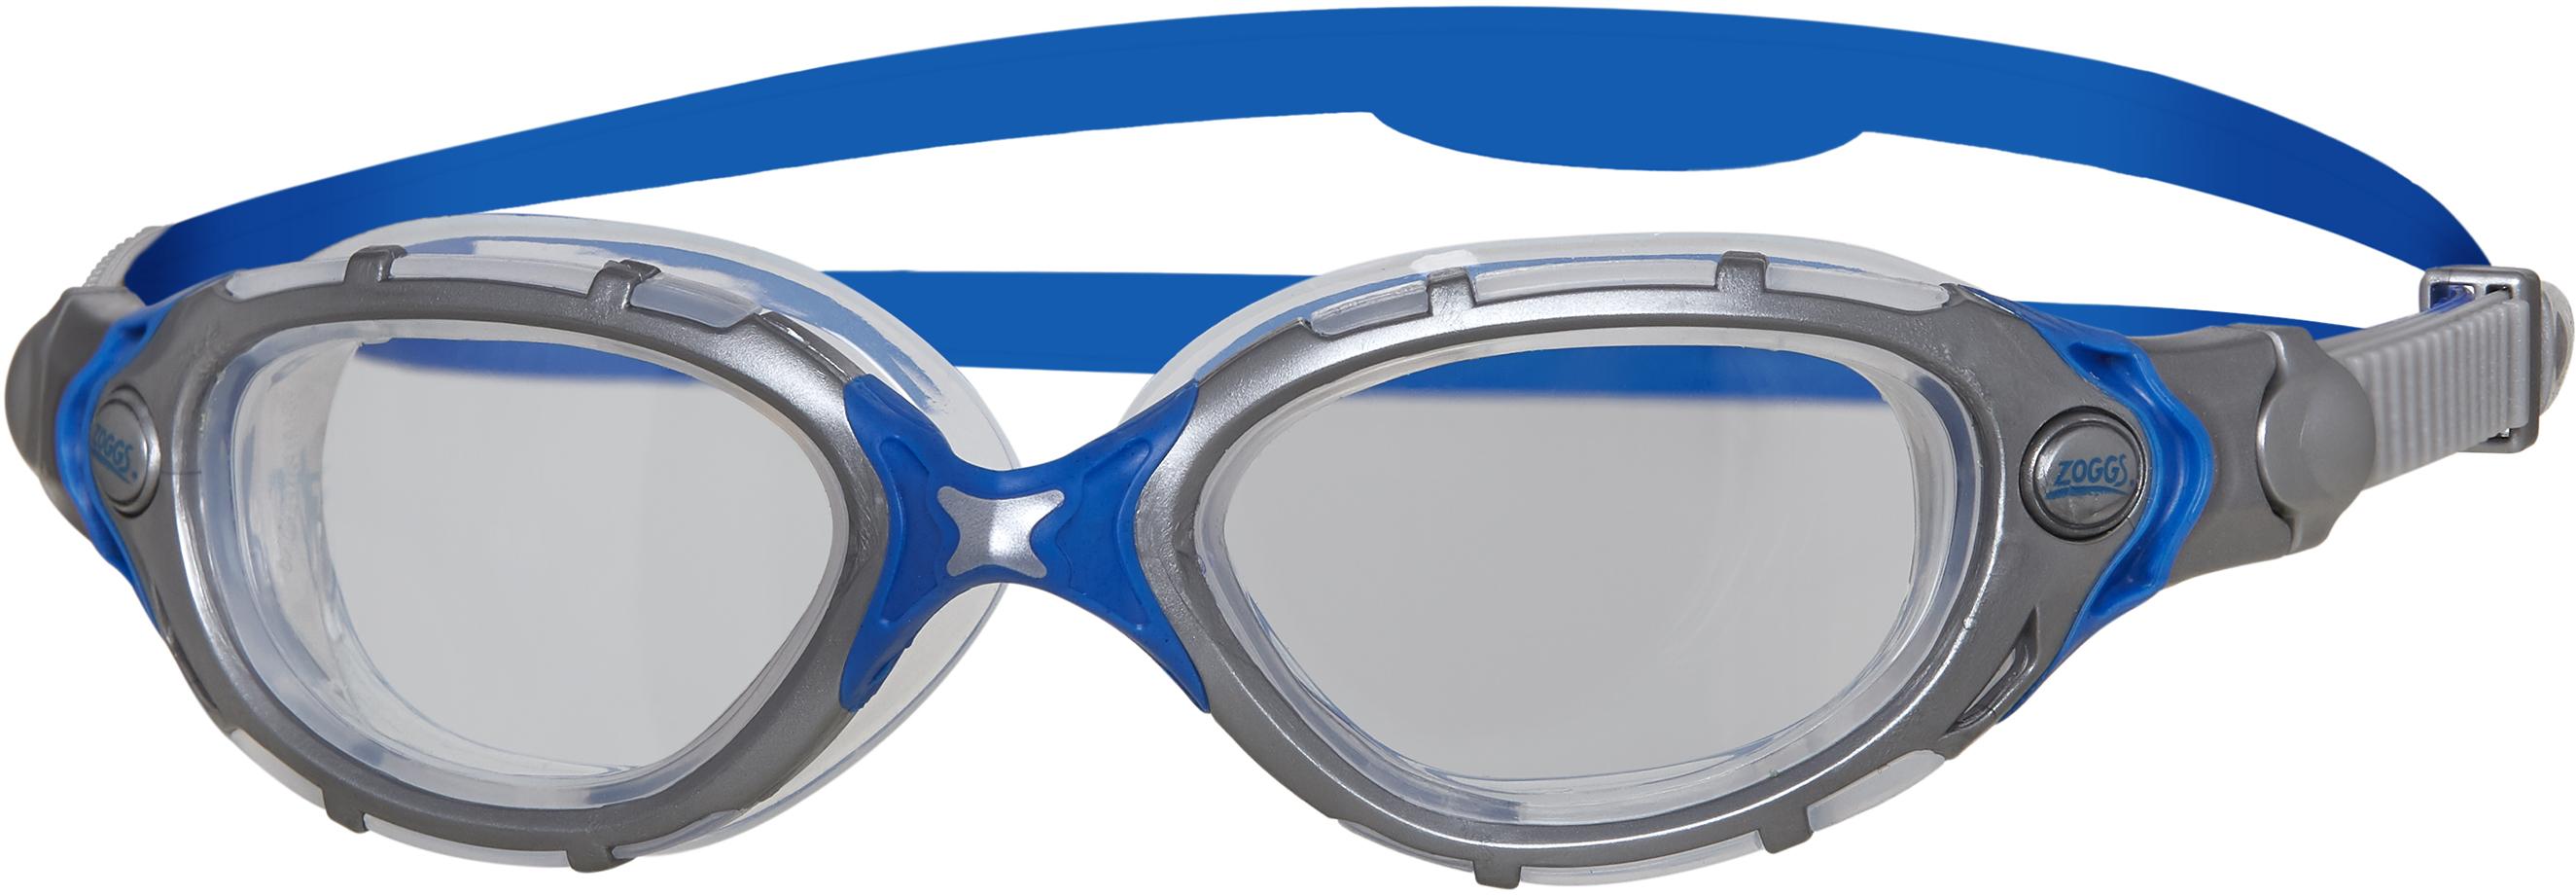 Zoggs Predator Flex 1.0 Clear Lens Goggles - Clear/silver/blue